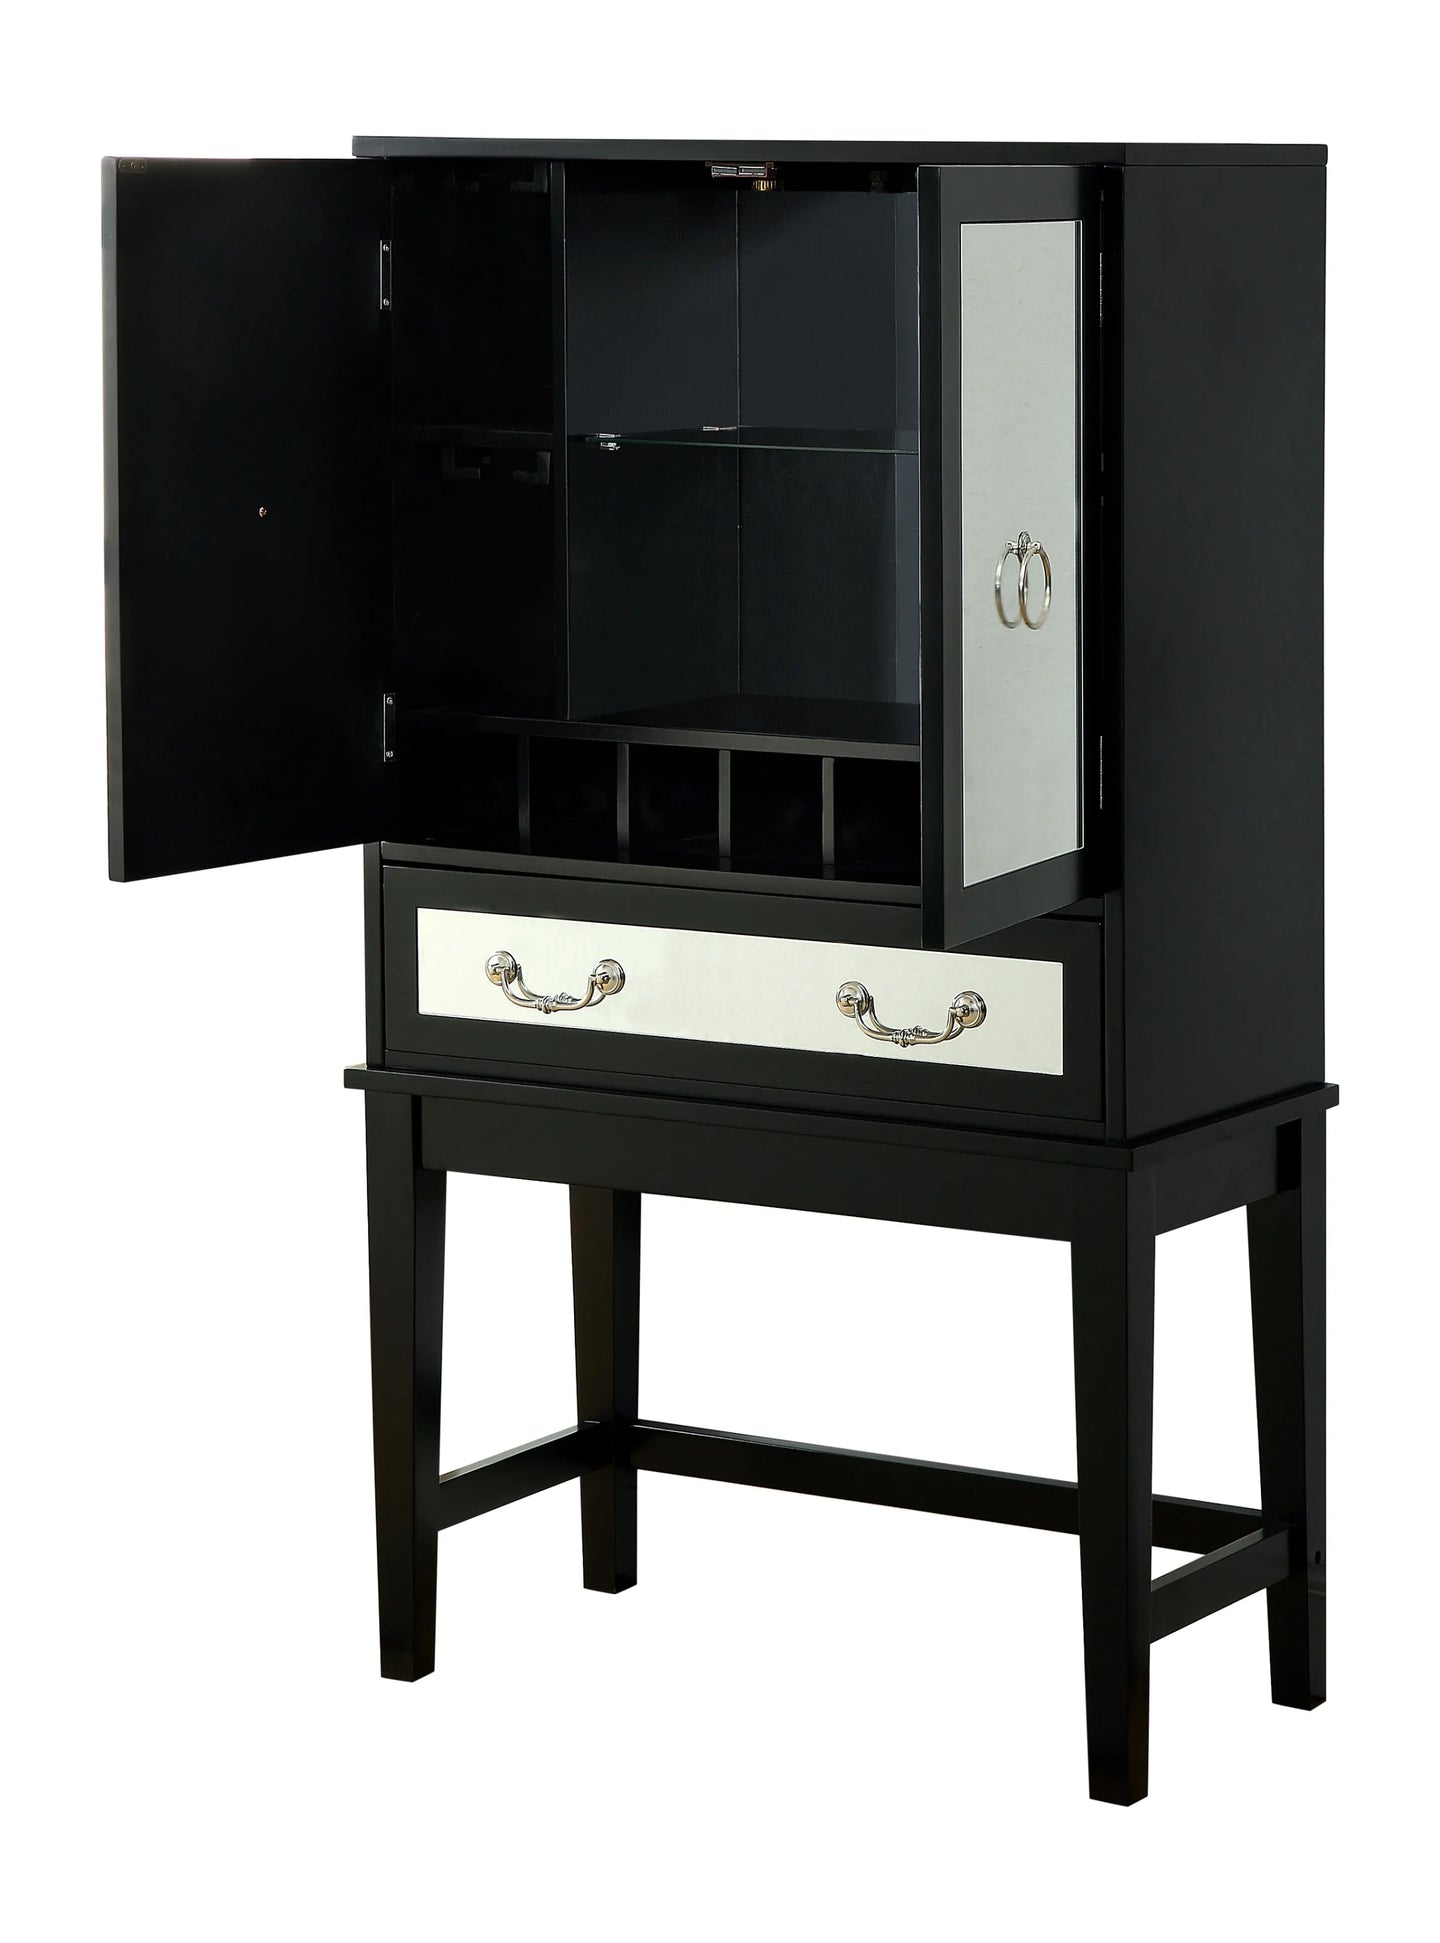 Furniture of America Louis Contemporary Multi-Storage Wine Cabinet - IDF-AC331